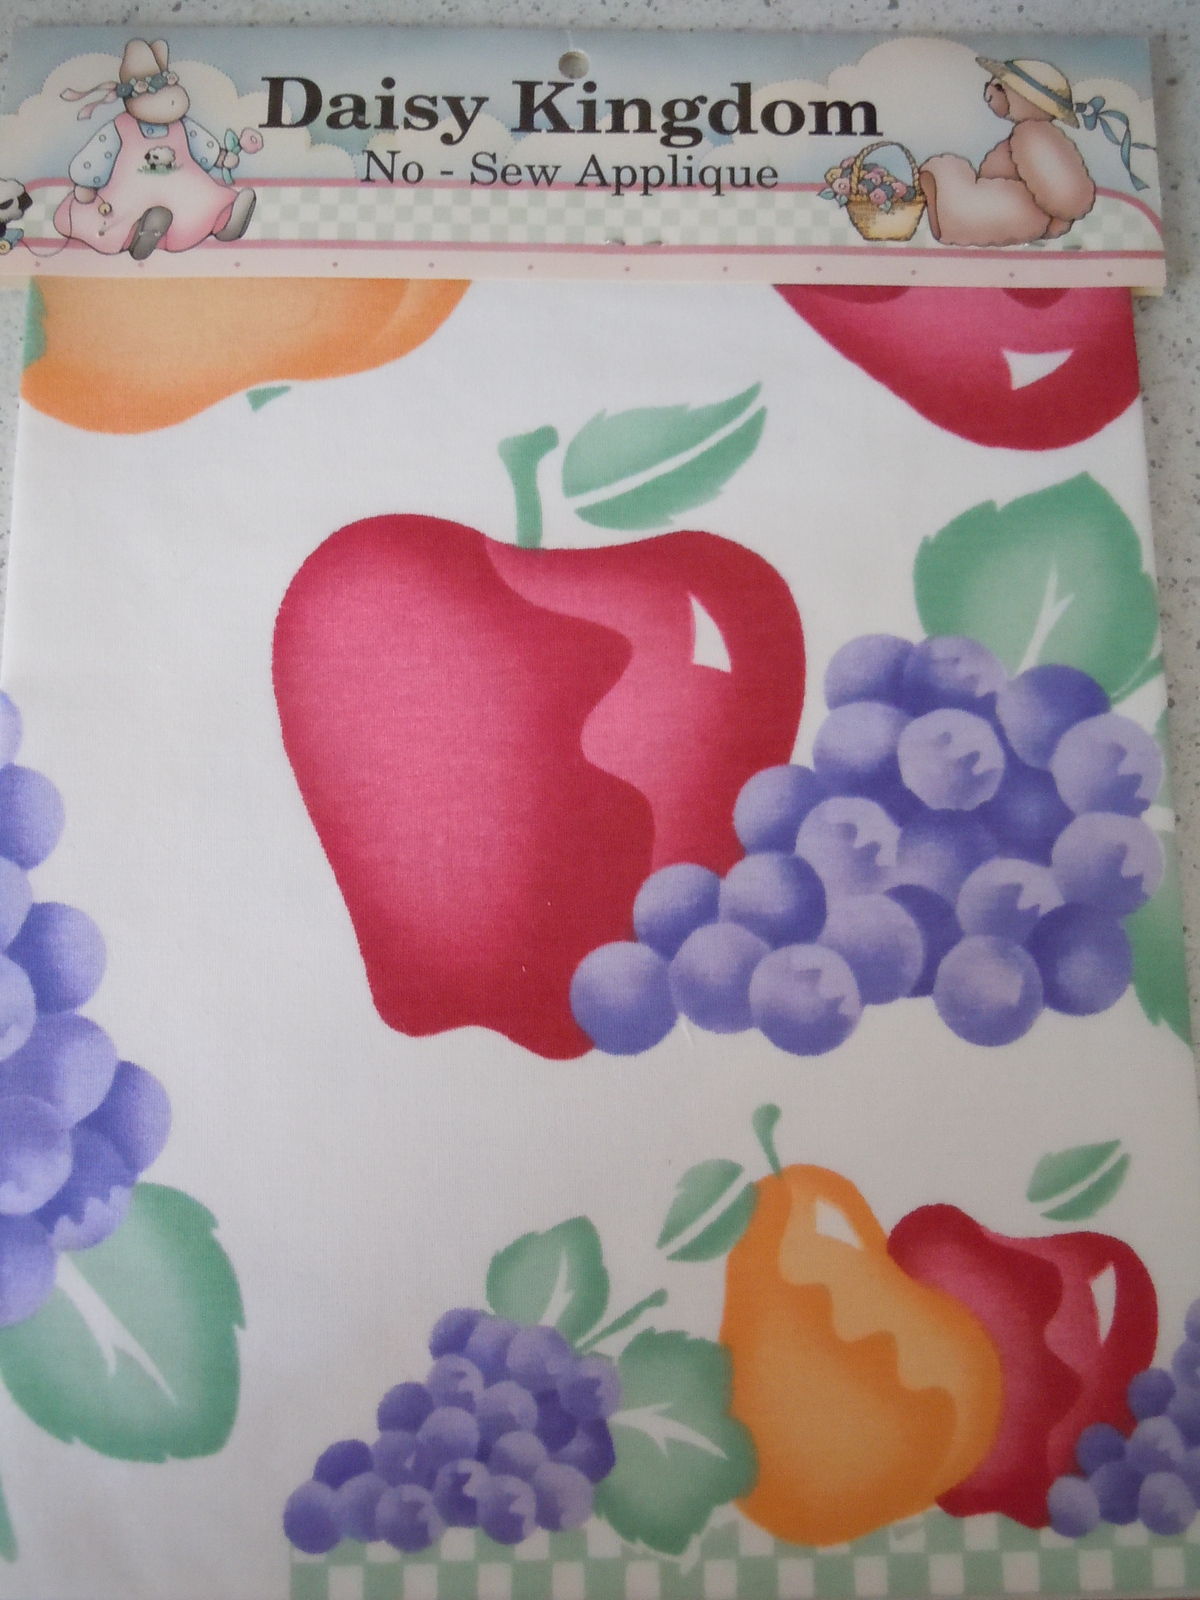 Daisy Kingdom No Sew Applique Fruit Medley  1990 New In Wrapper - $3.99